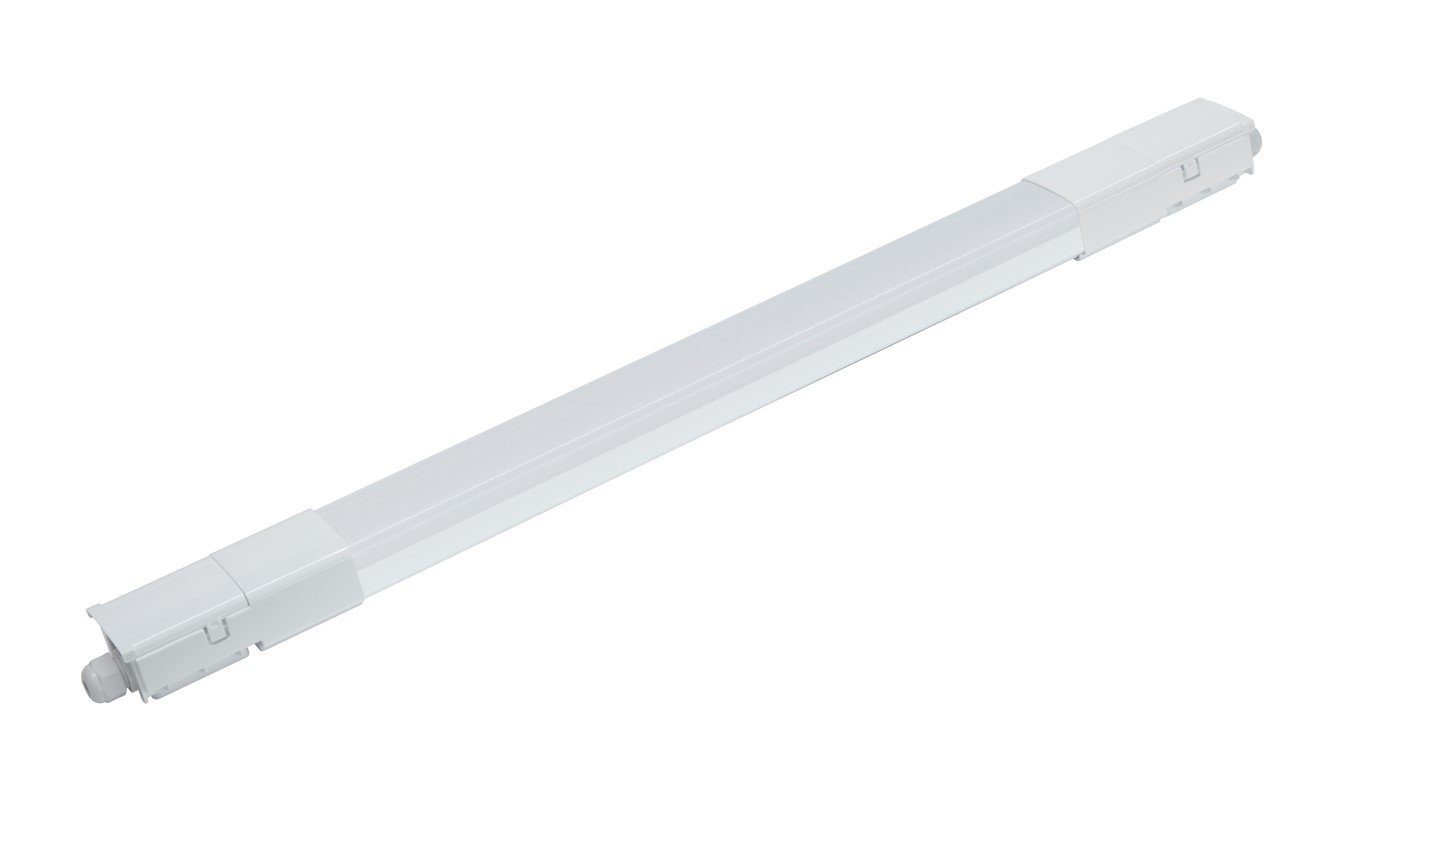 LUXULA LED Unterbauleuchte LED Feuchtraumleuchte, 75 cm, 16 W, 1760 lm,  neutralweiß, IP66, LED fest integriert, neutralweiß | Unterbauleuchten